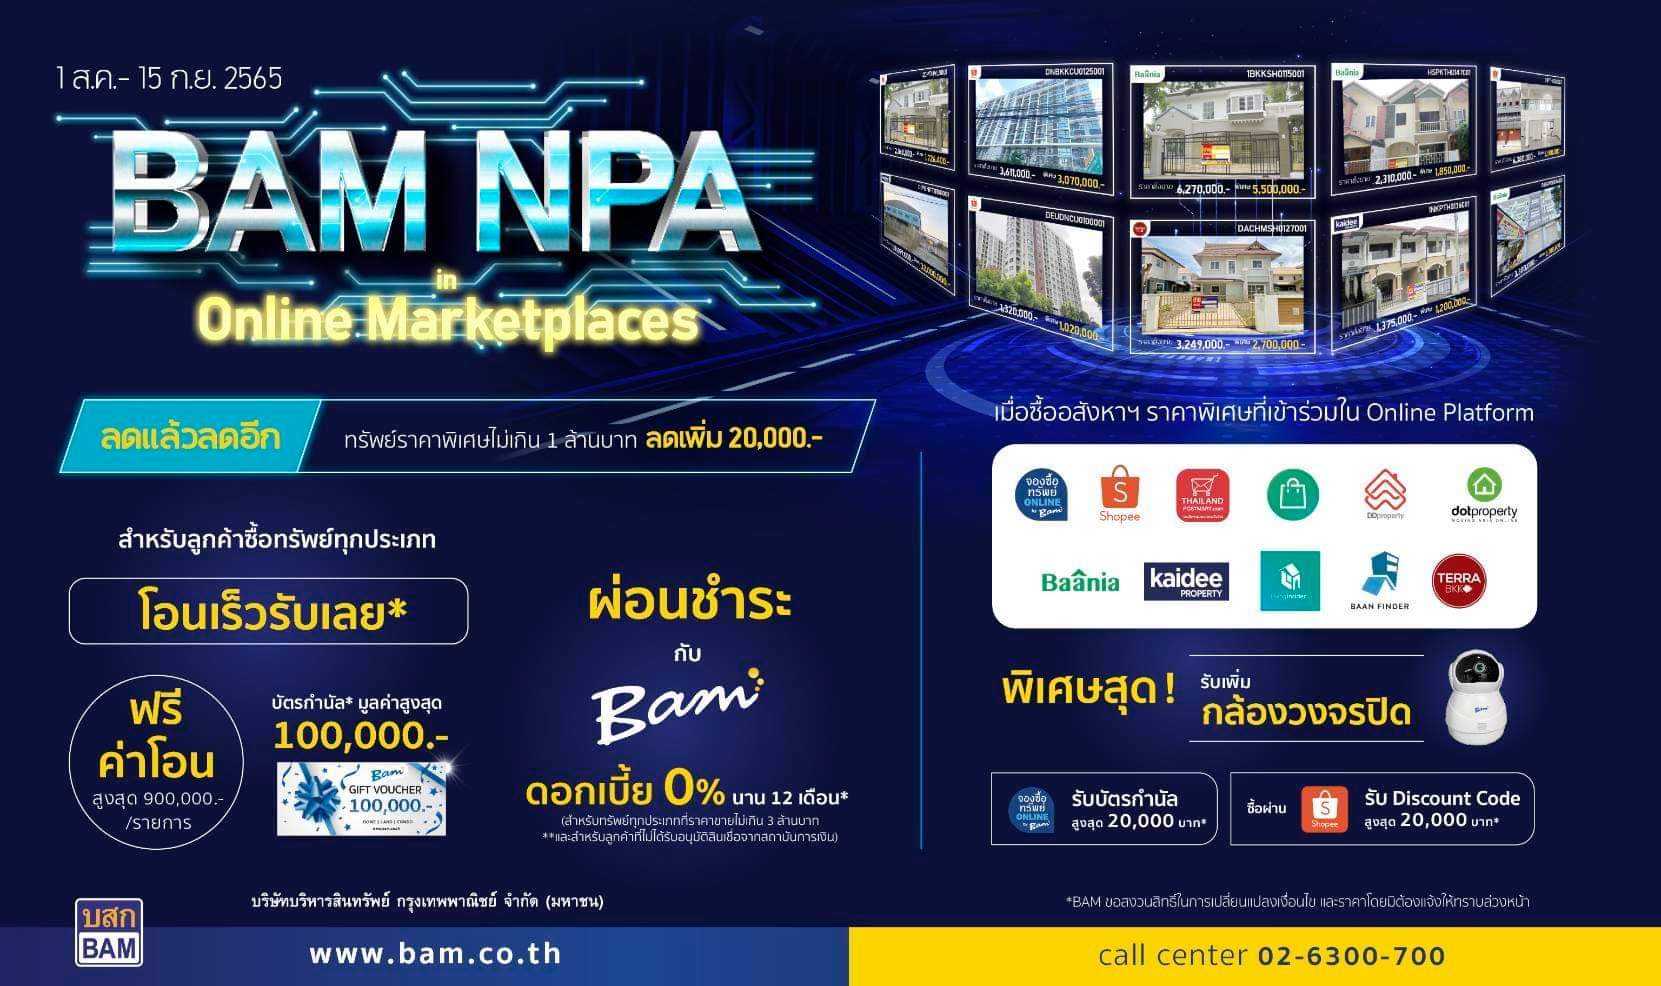 BAM รุกตลาด E-Commerce จัดแคมเปญ “BAM NPA in Online Marketplaces” ลดราคาสูงสุดกว่า 50% พร้อมฟรีโอน 1 ส.ค. – 15 ก.ย. 65